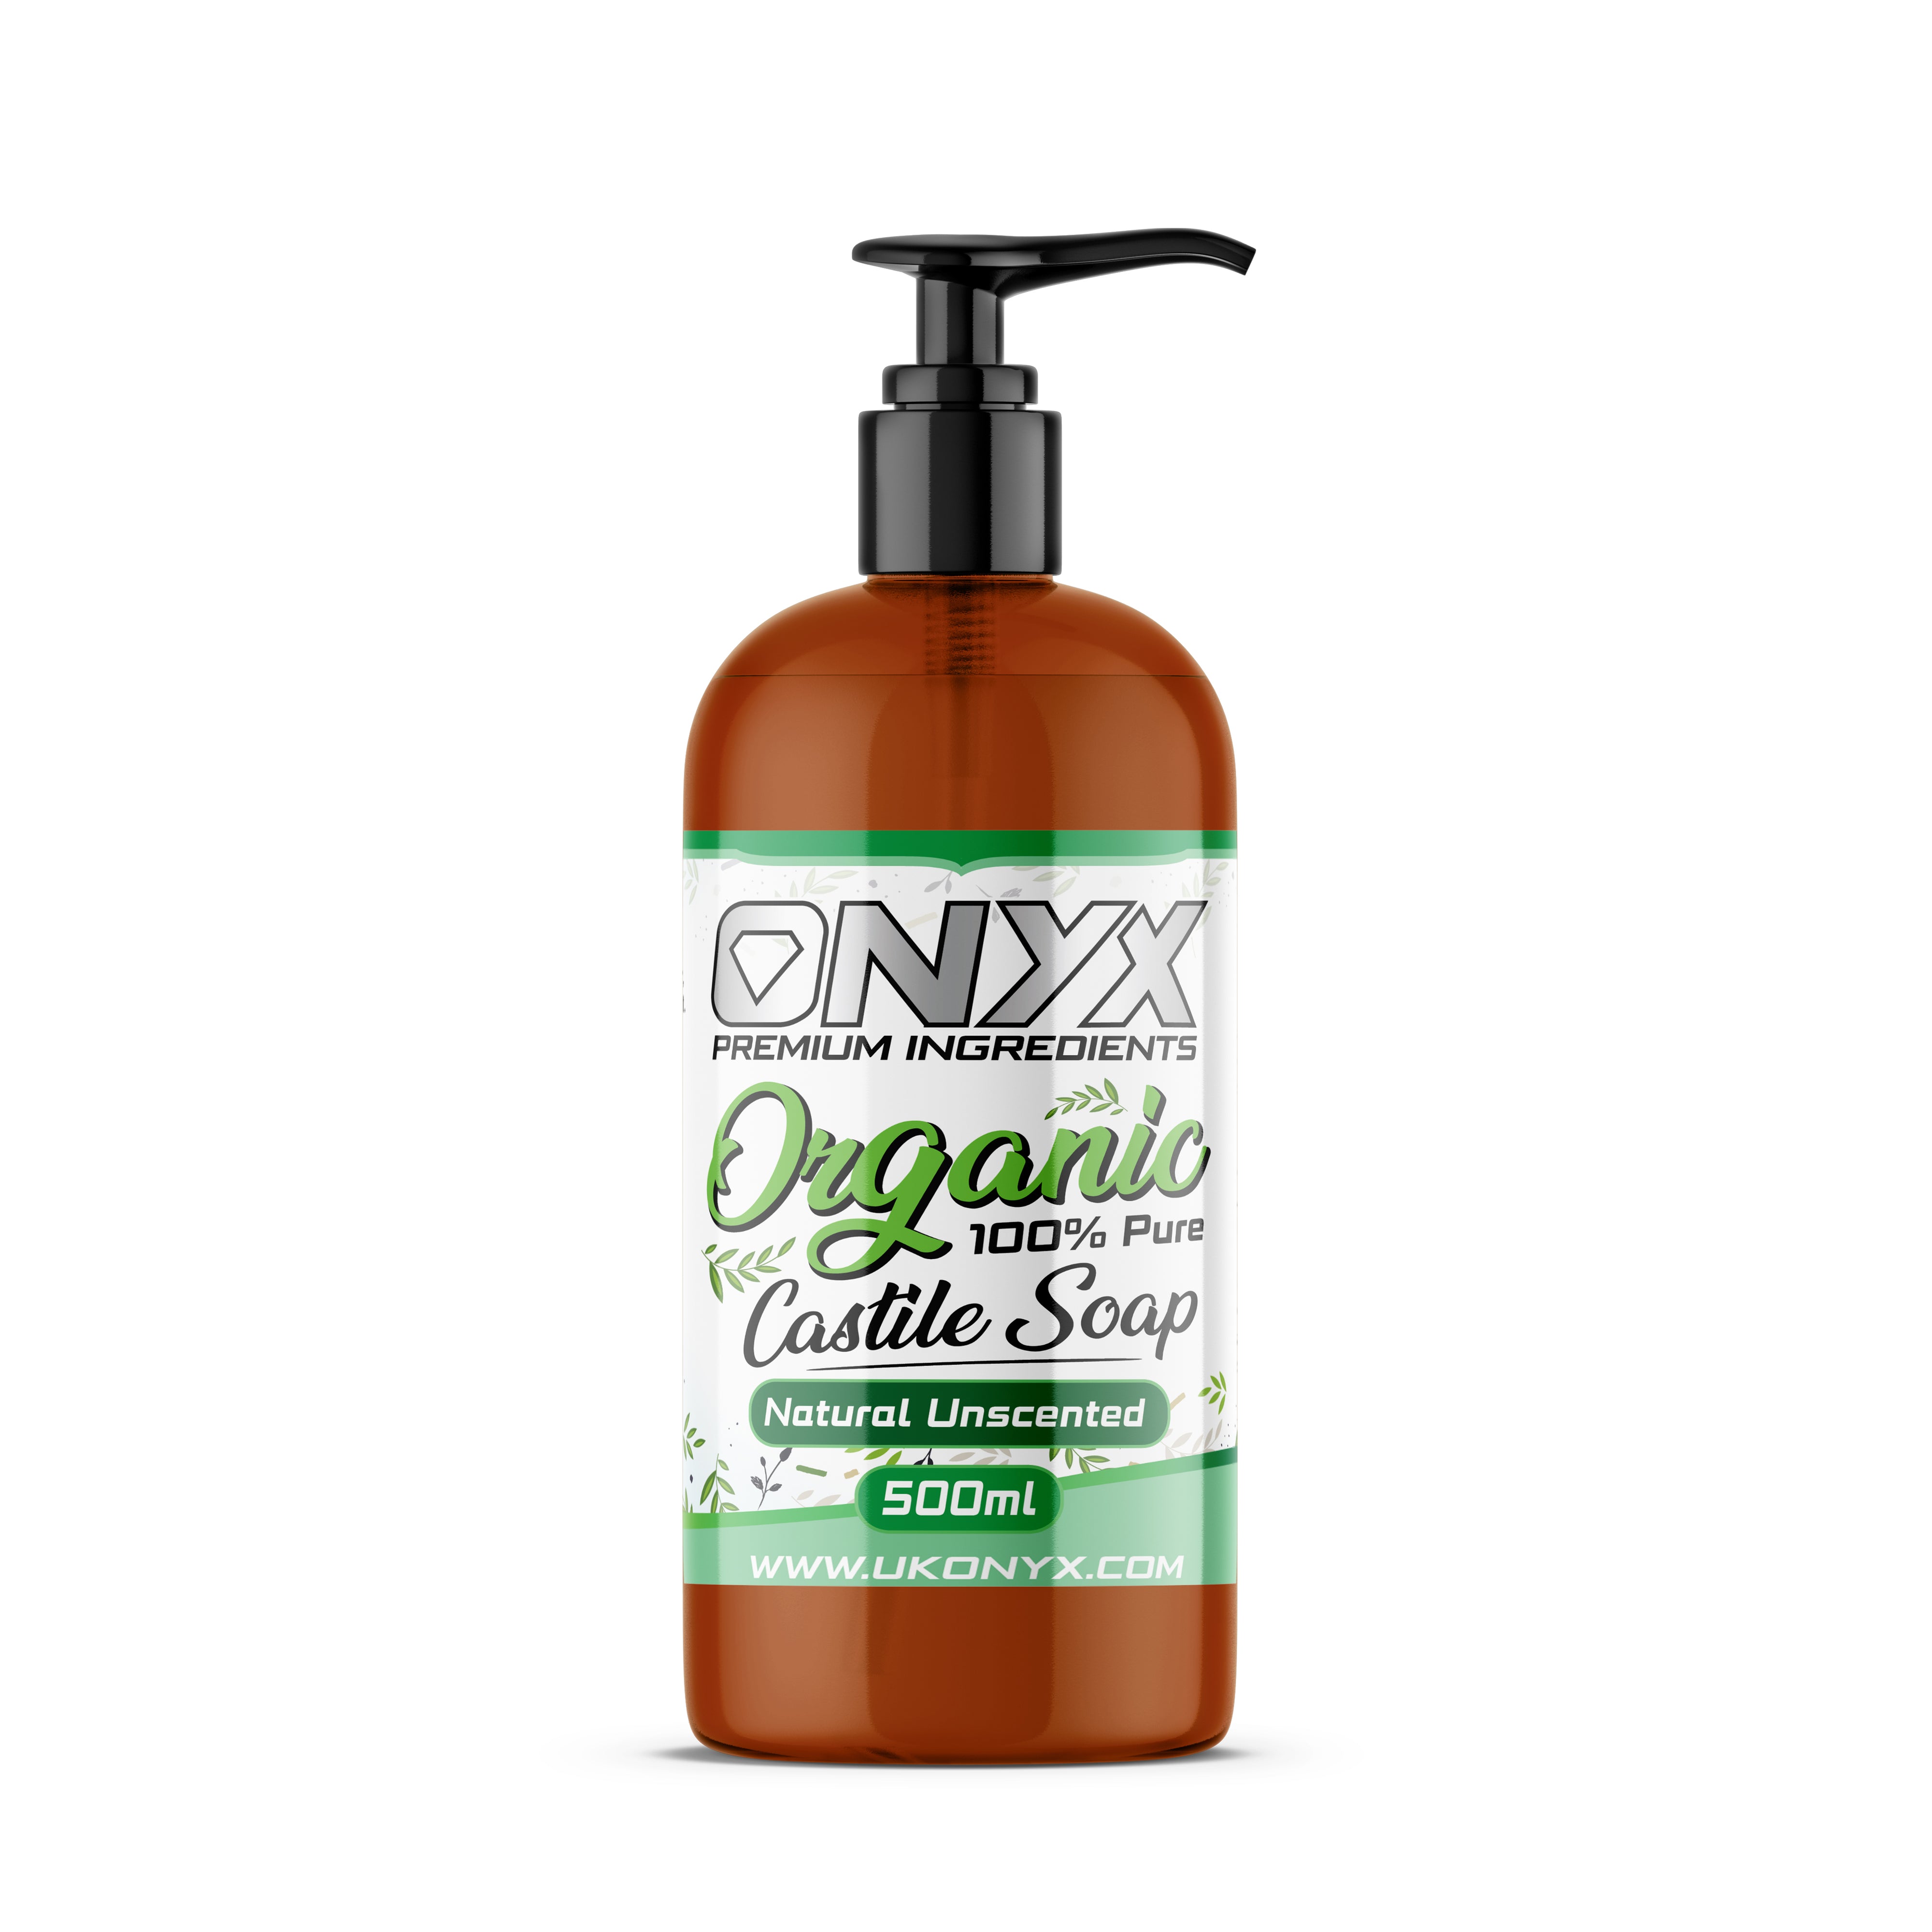 Organic Castile Soap Natural Unscented 500ml